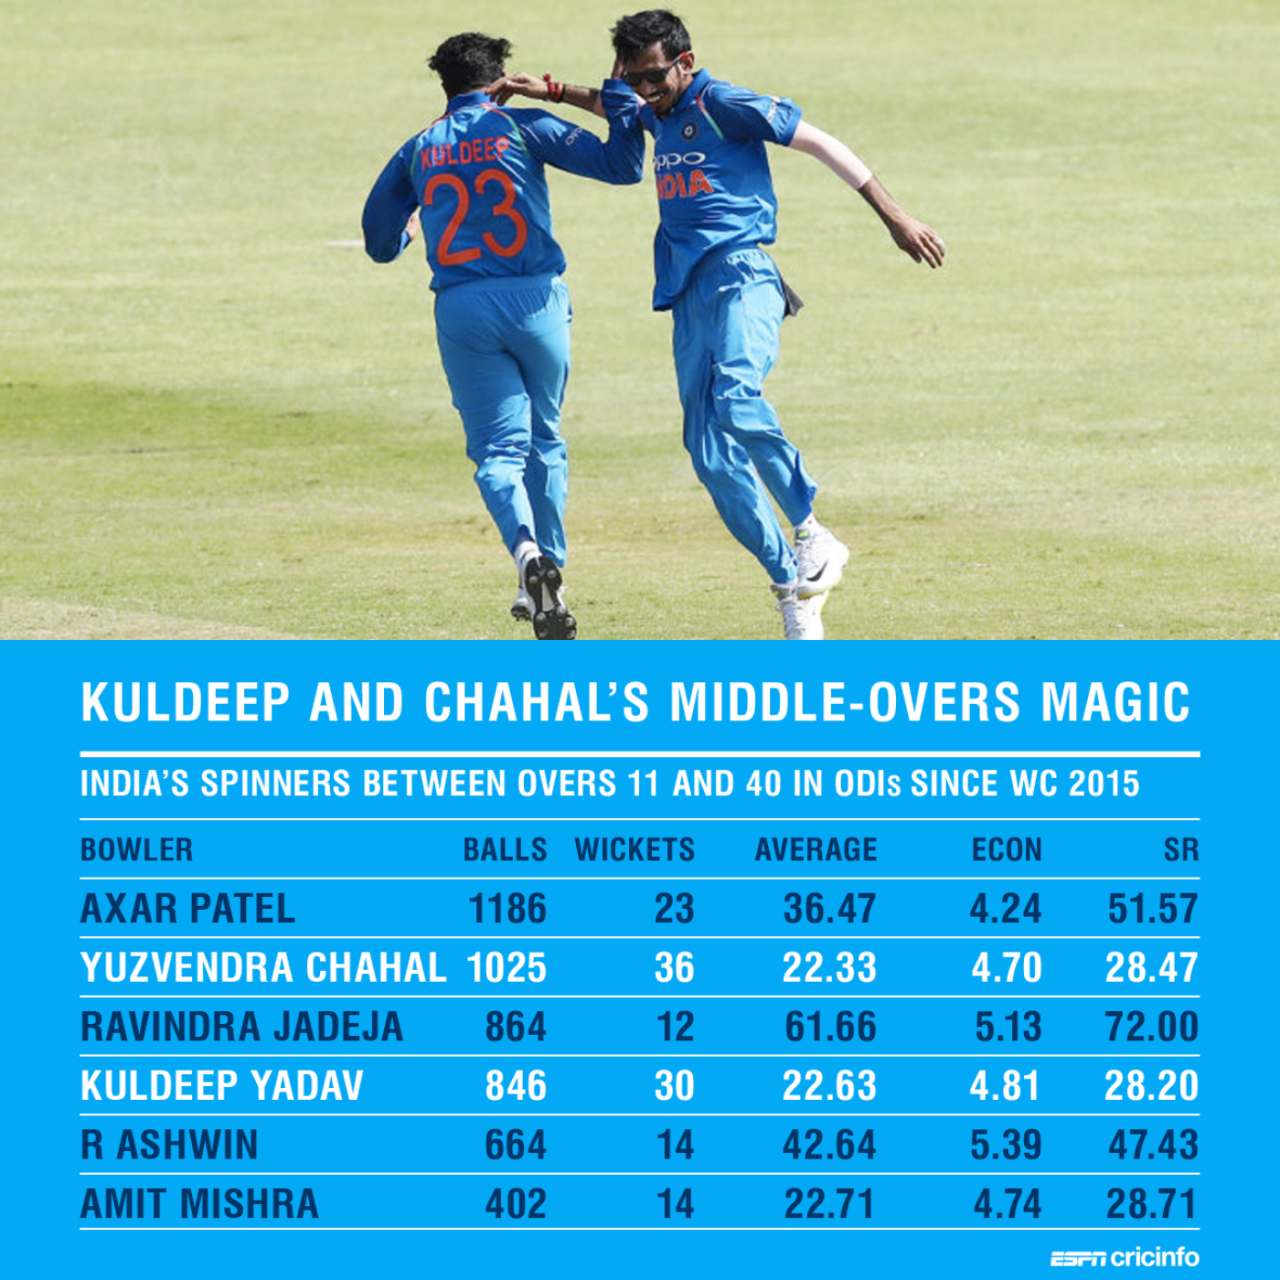 Kuldeep Yadav and Yuzvendra Chahal have made a big impact on India's middle-overs bowling